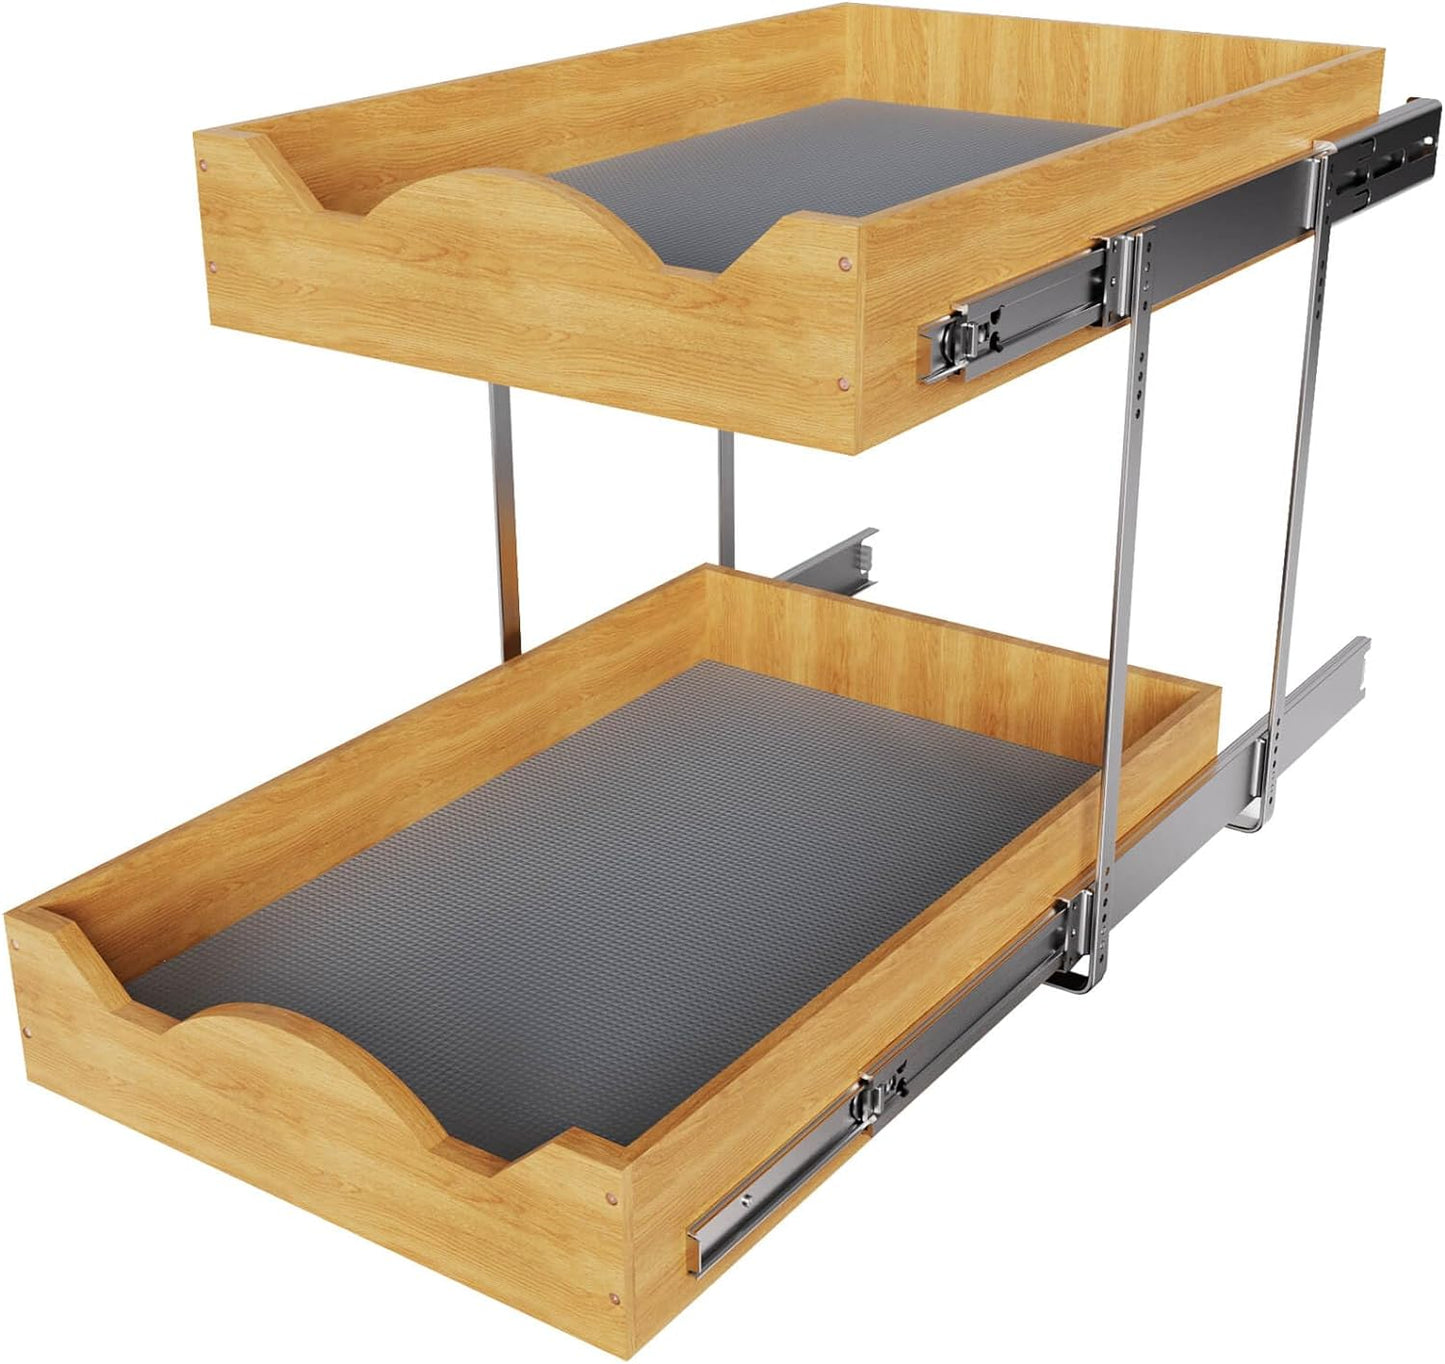 OCG 2 Tier Pull Out Cabinet Organizer (20" W x 21" D), Heavy-Duty Slide out Wood Drawer Shelf